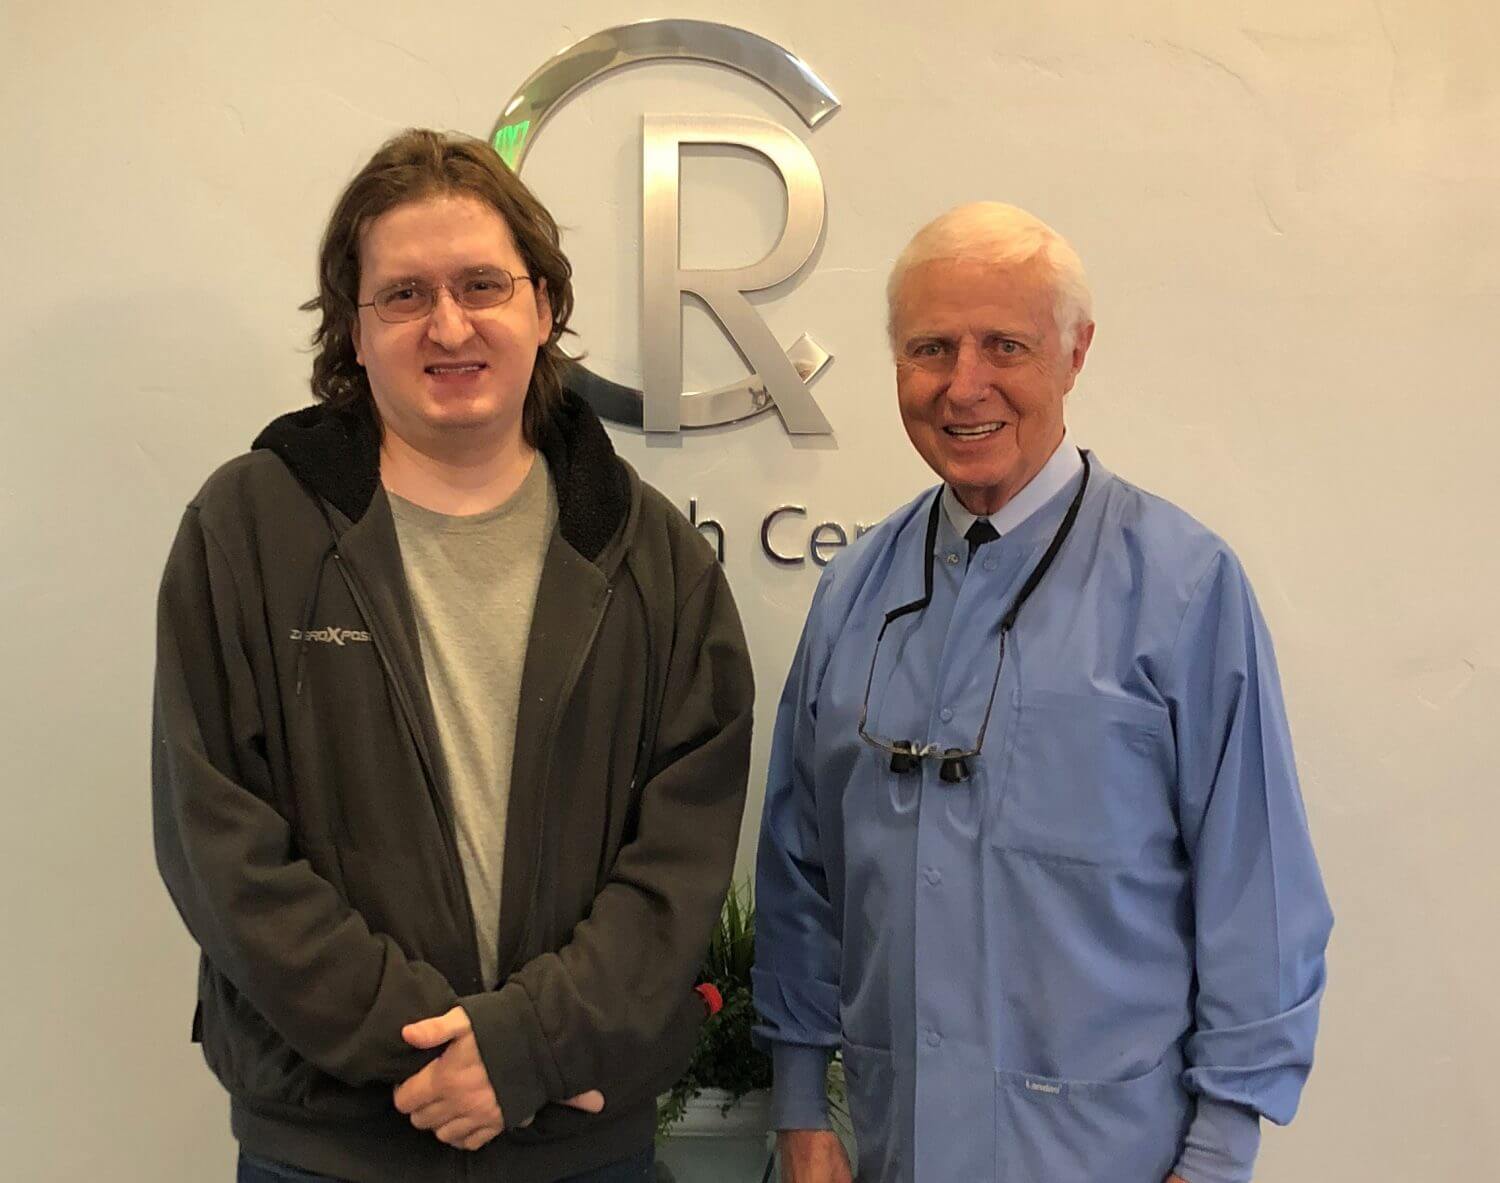 Lifeline in Action – Dr. Gordon Christensen helps Utah man improve his smile and spirits